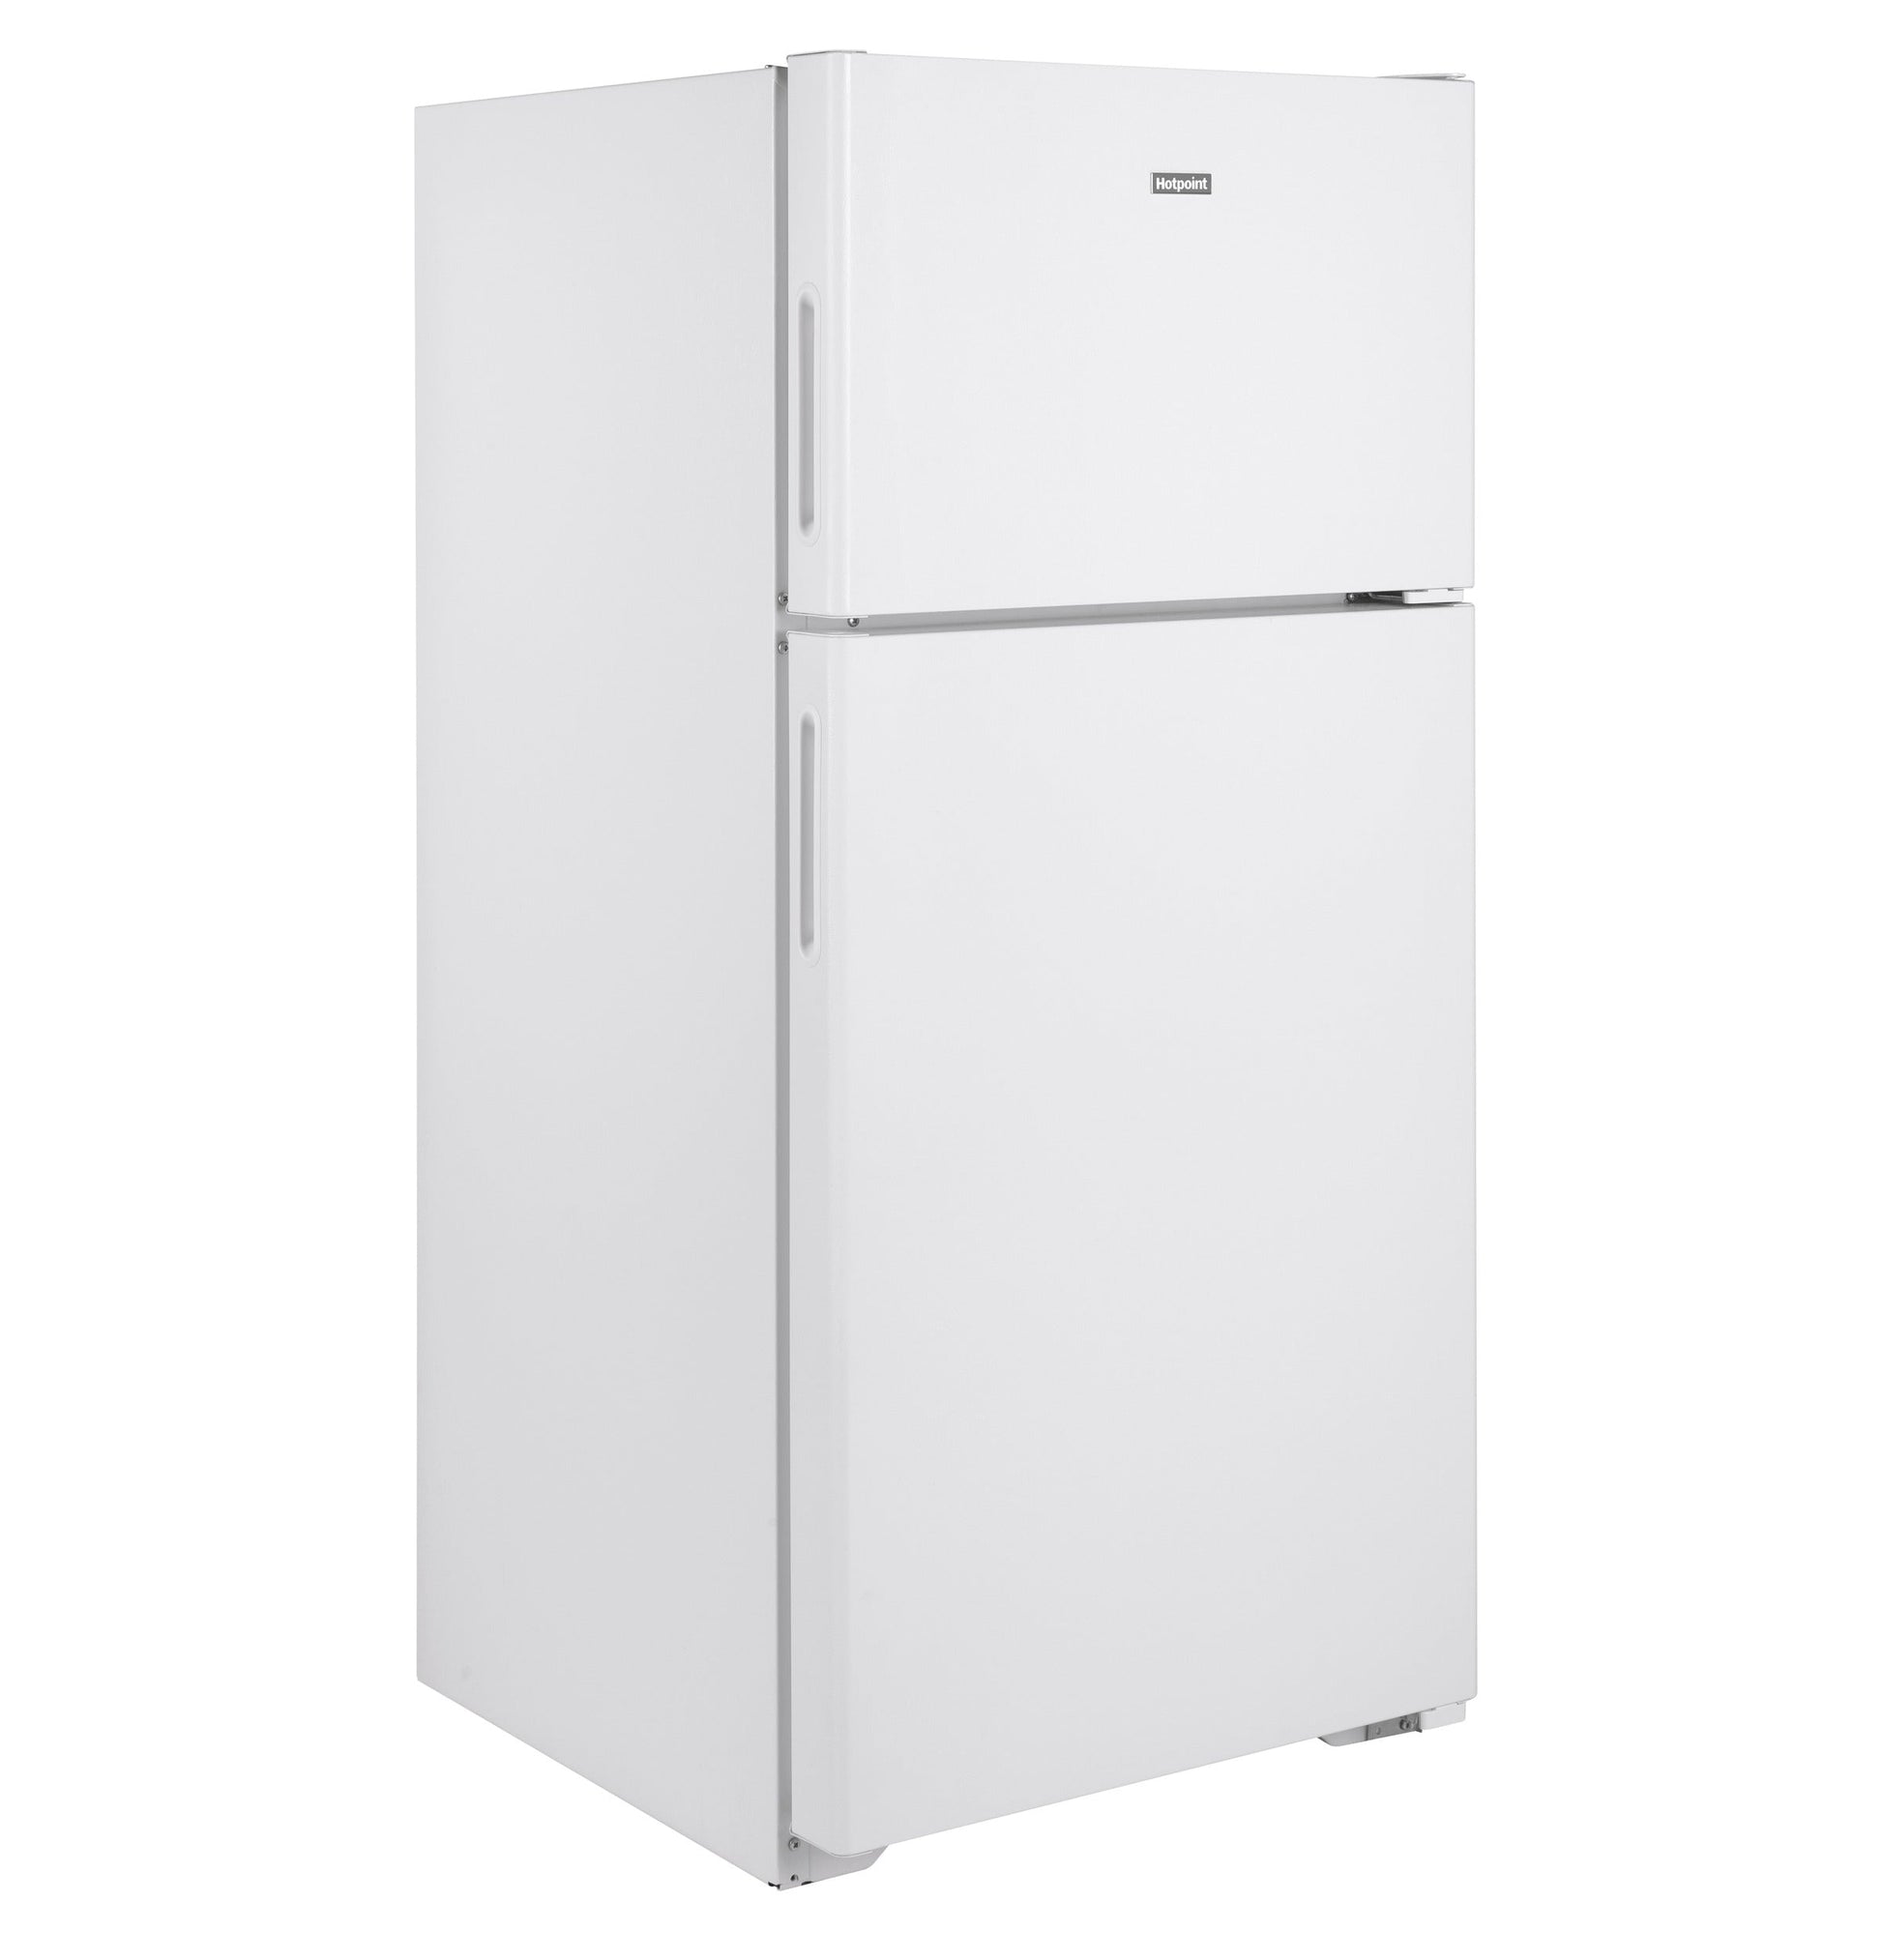 Hotpoint Energy Star® 15.6 Cu. Ft. Top Mount Refrigerator White - HPE16BTNRWW